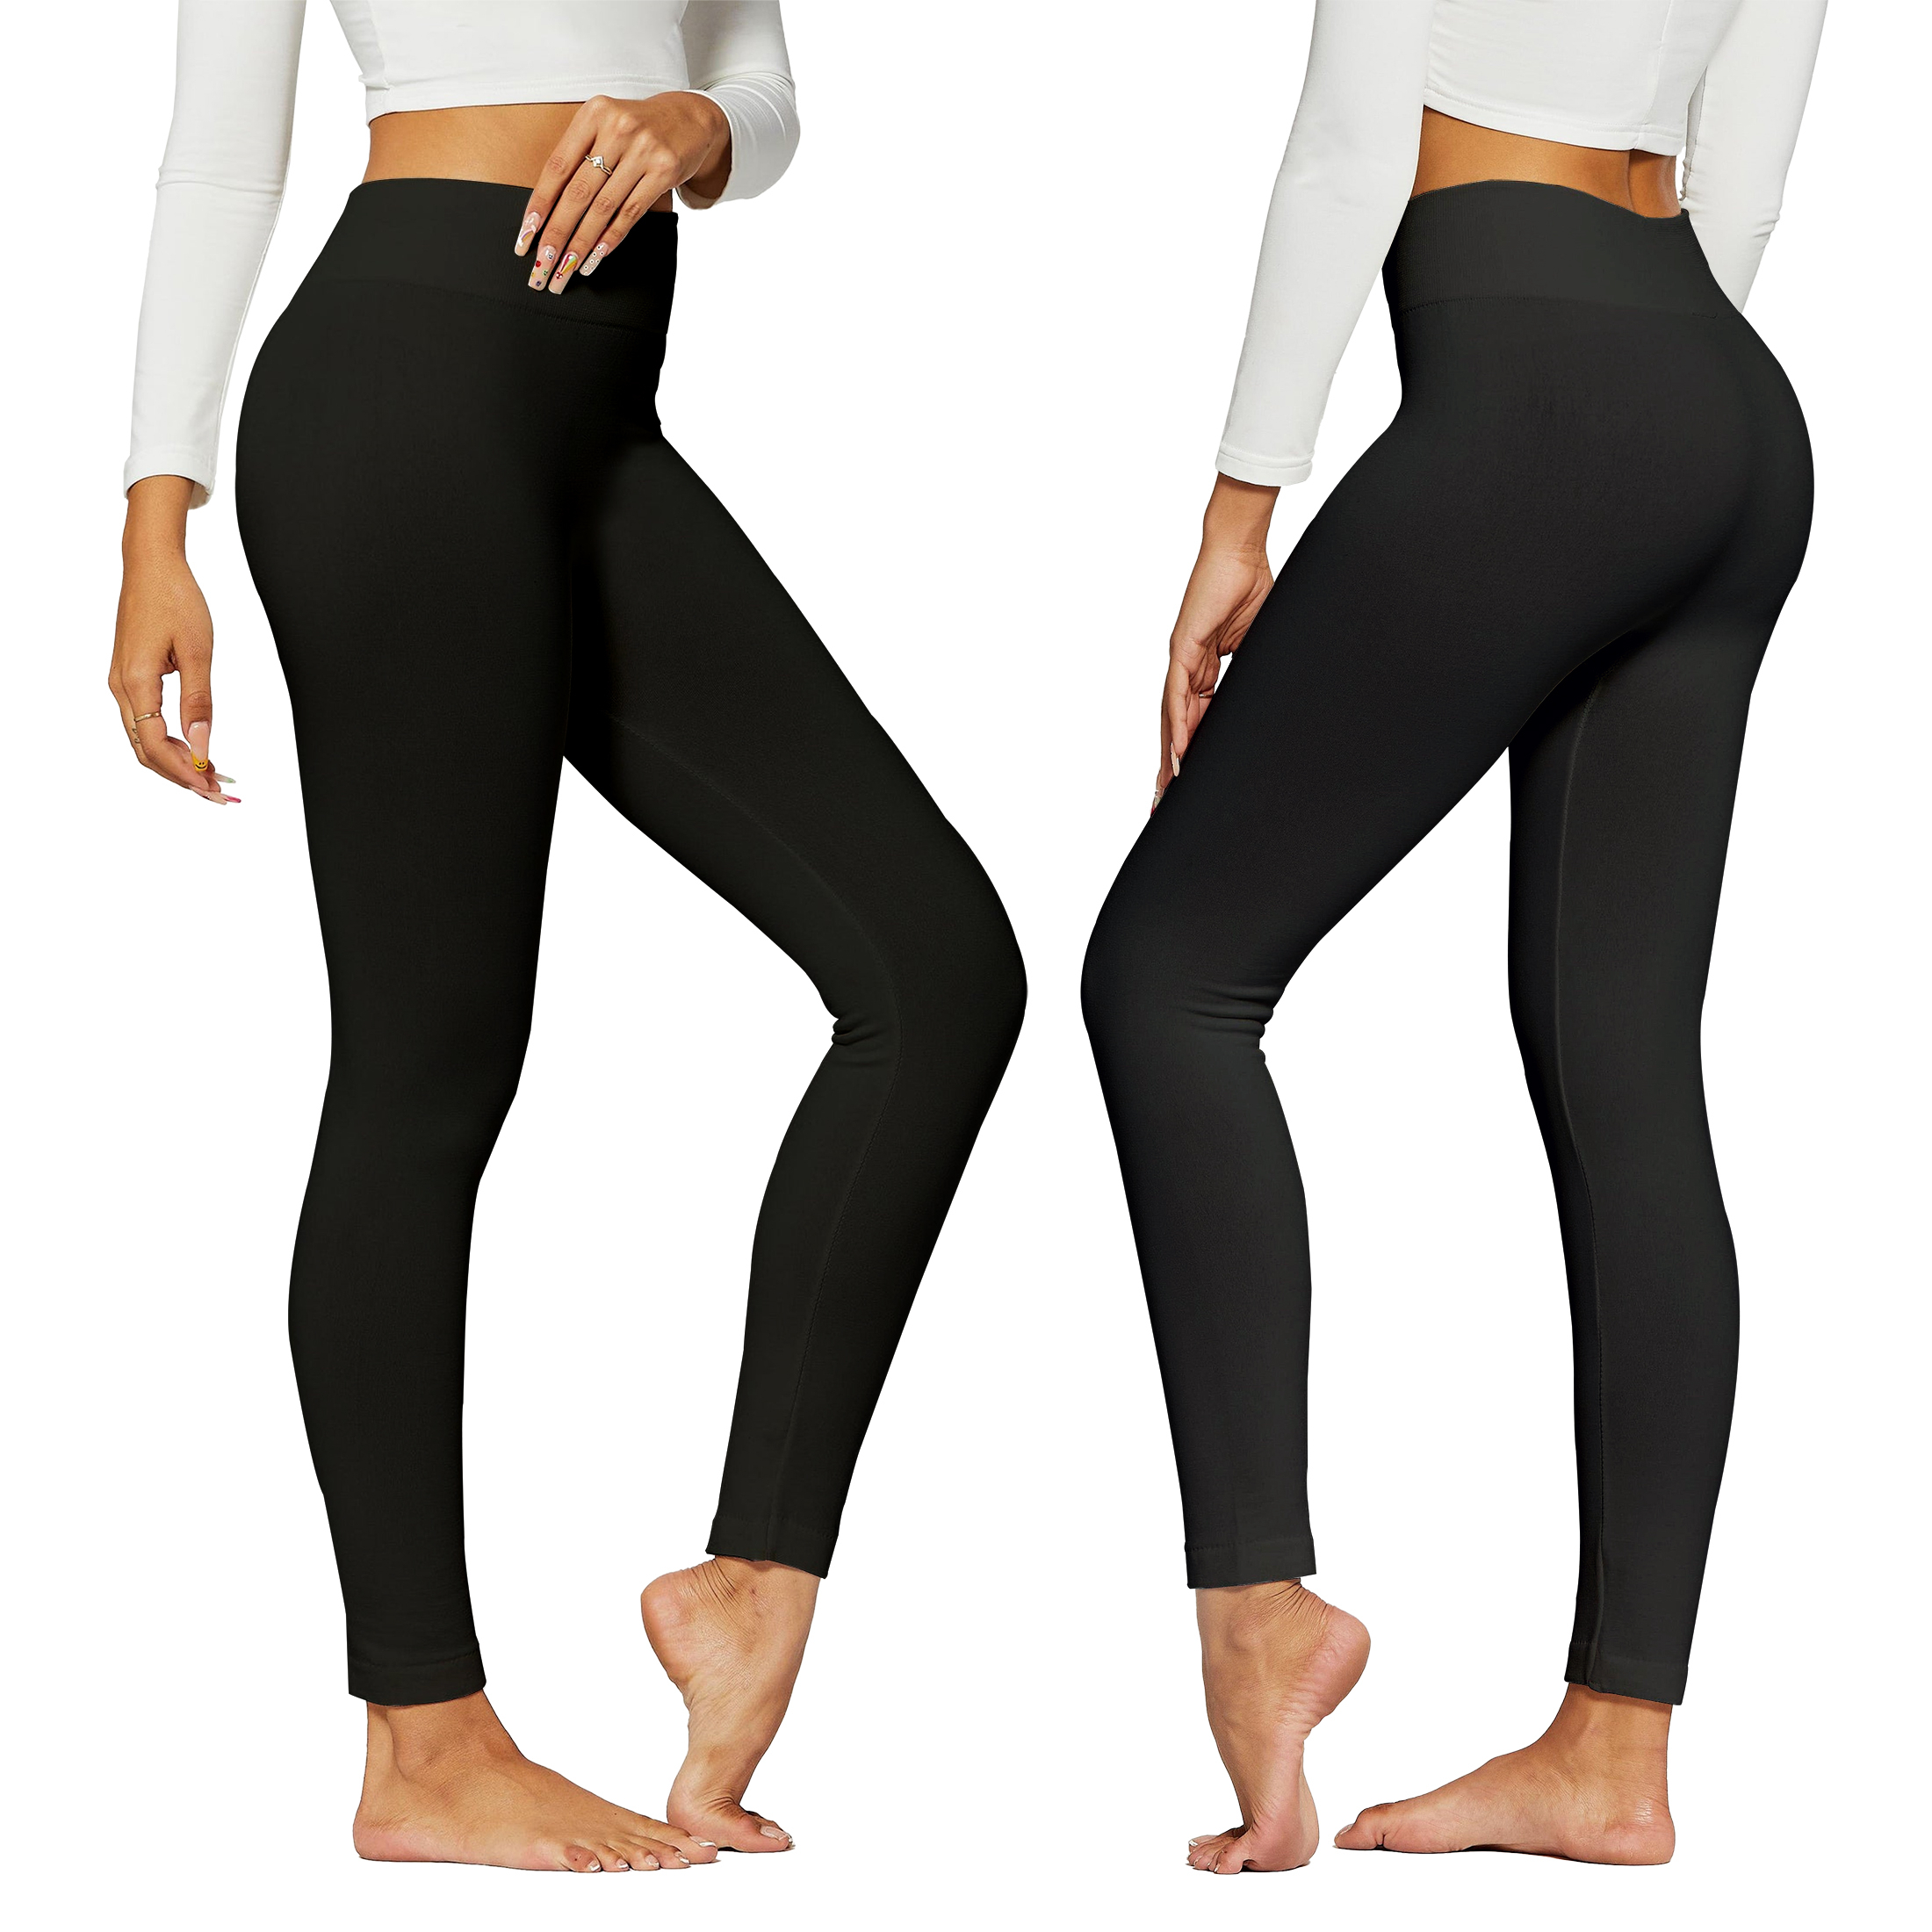 4-Pack:Women's Premium Quality High-Waist Fleece-Lined Leggings (Plus Size Available) - Black, Large/X-Large